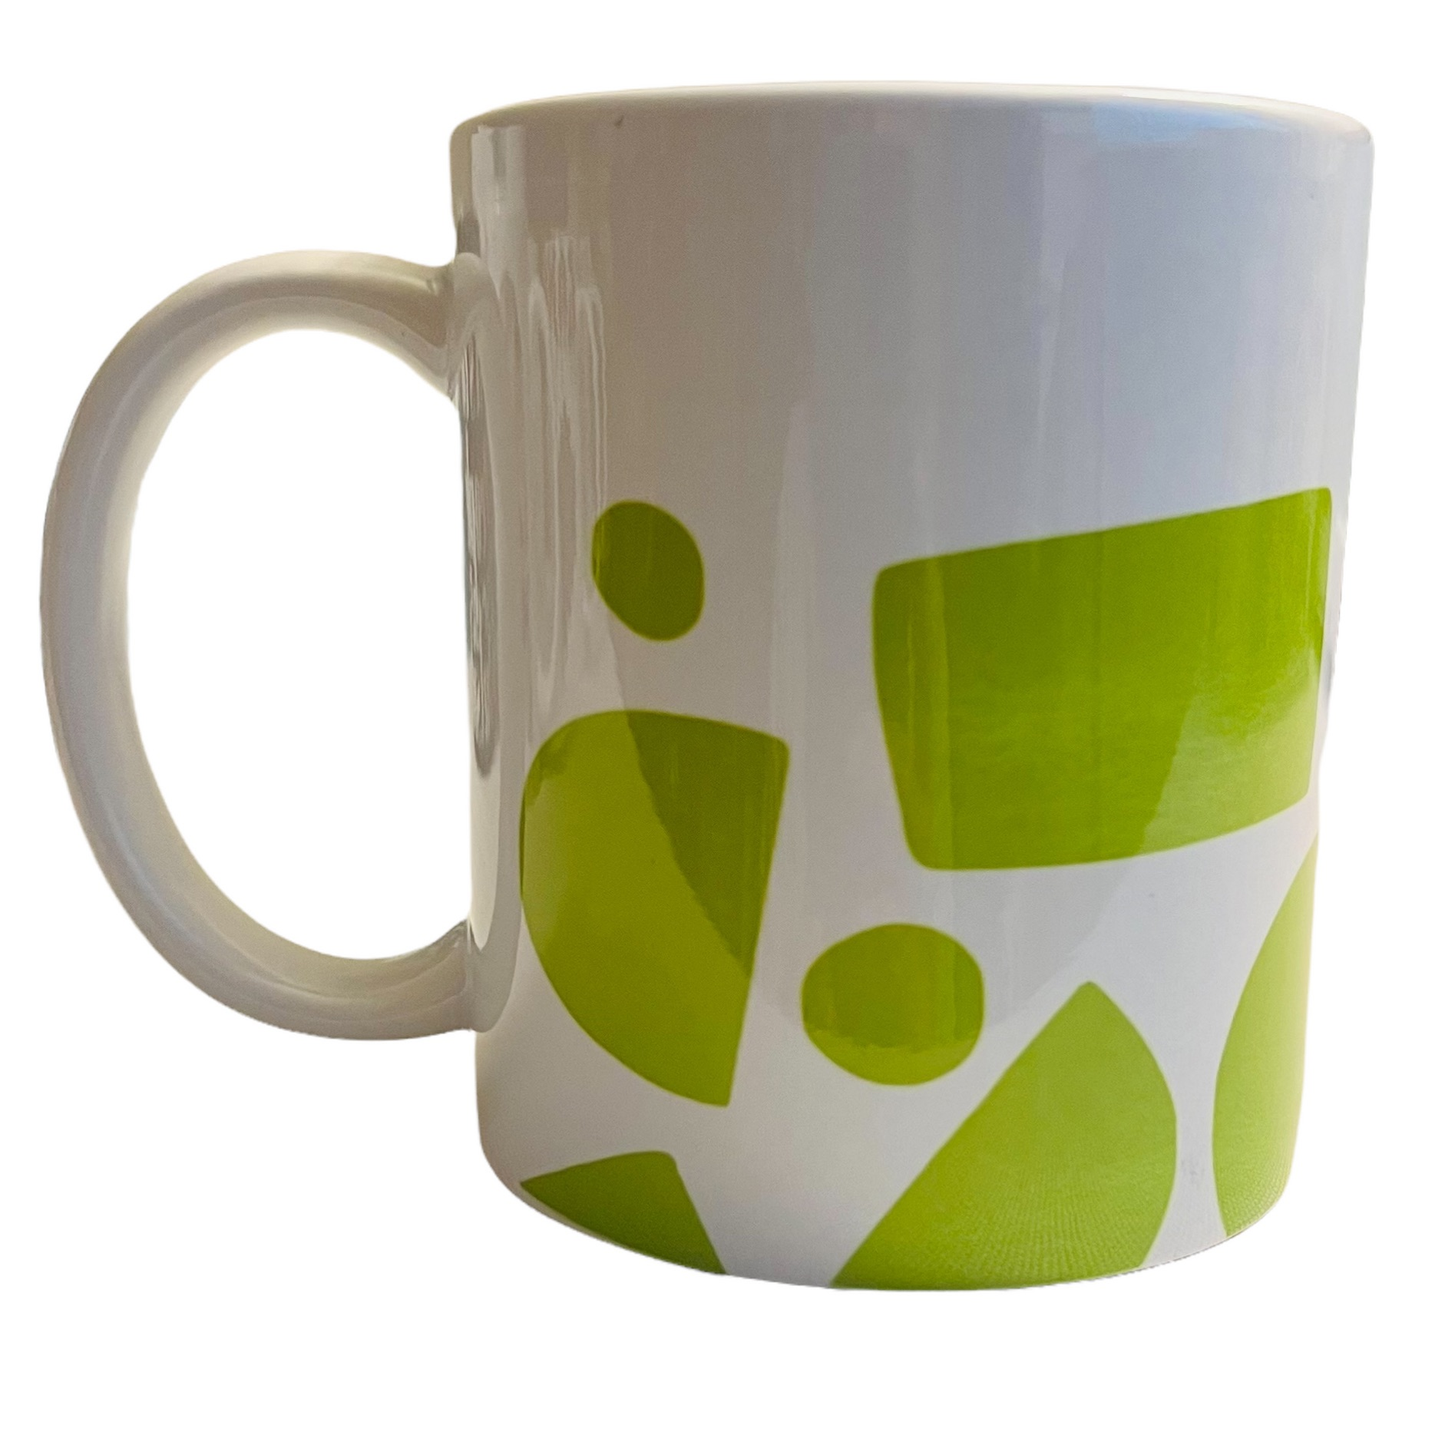 JenDore Green White Geometric 12 oz. Coffee Tea Mug